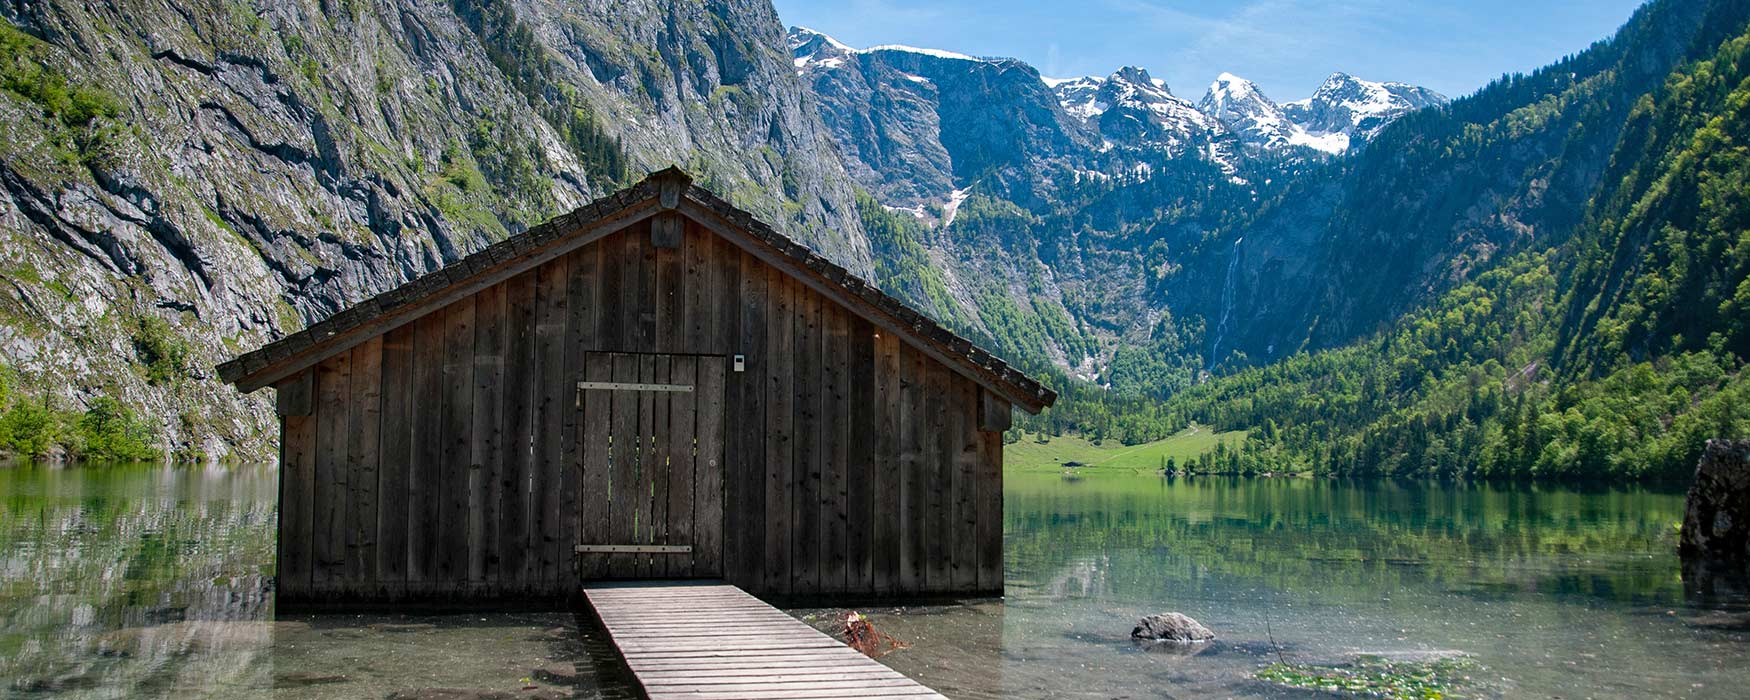 Fischerhütte am Obersee im Nationalpark Berchtesgaden